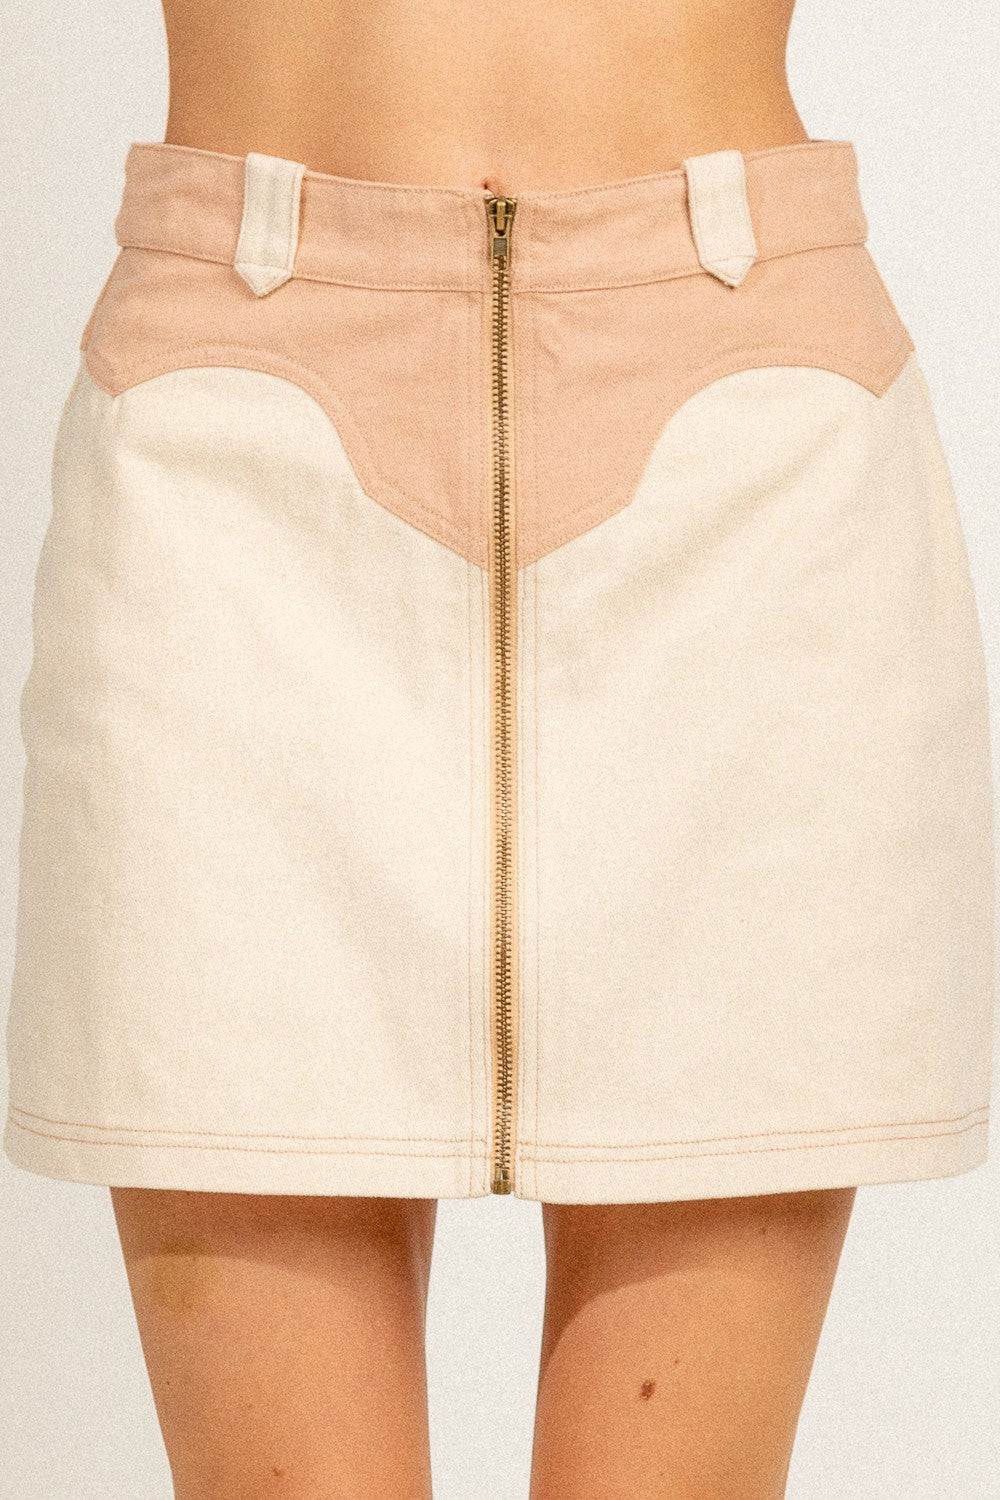 Casual Mini Cotton Skirt - Ecru - Southern Grace Creations